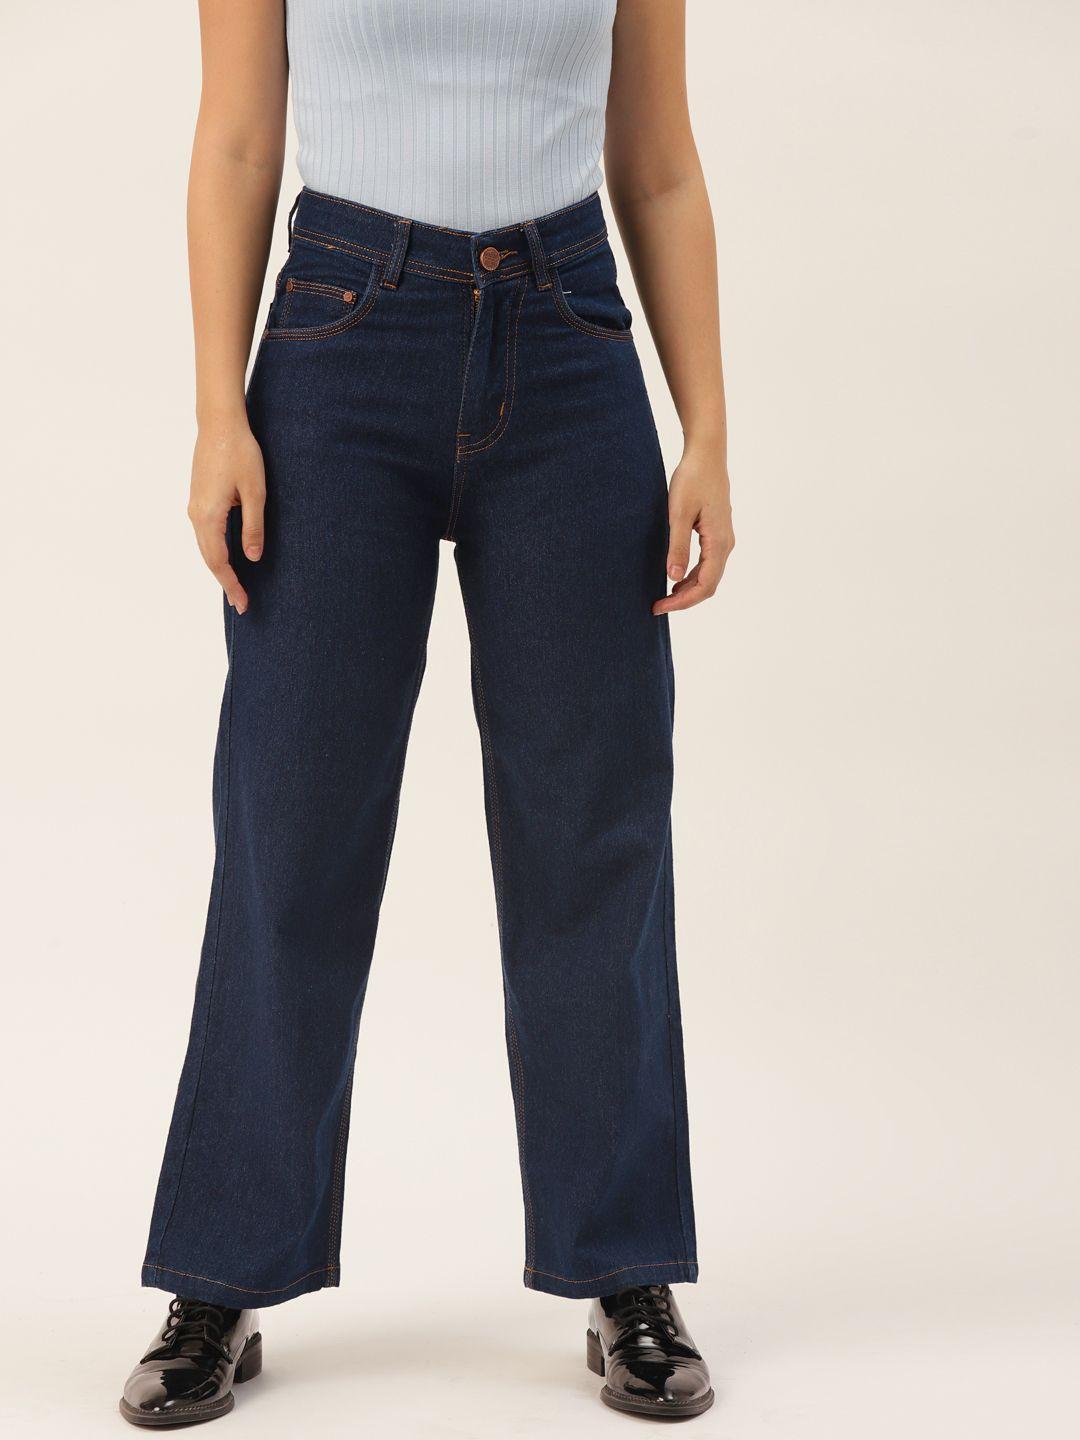 paris hamilton women navy blue flared high-rise stretchable jeans